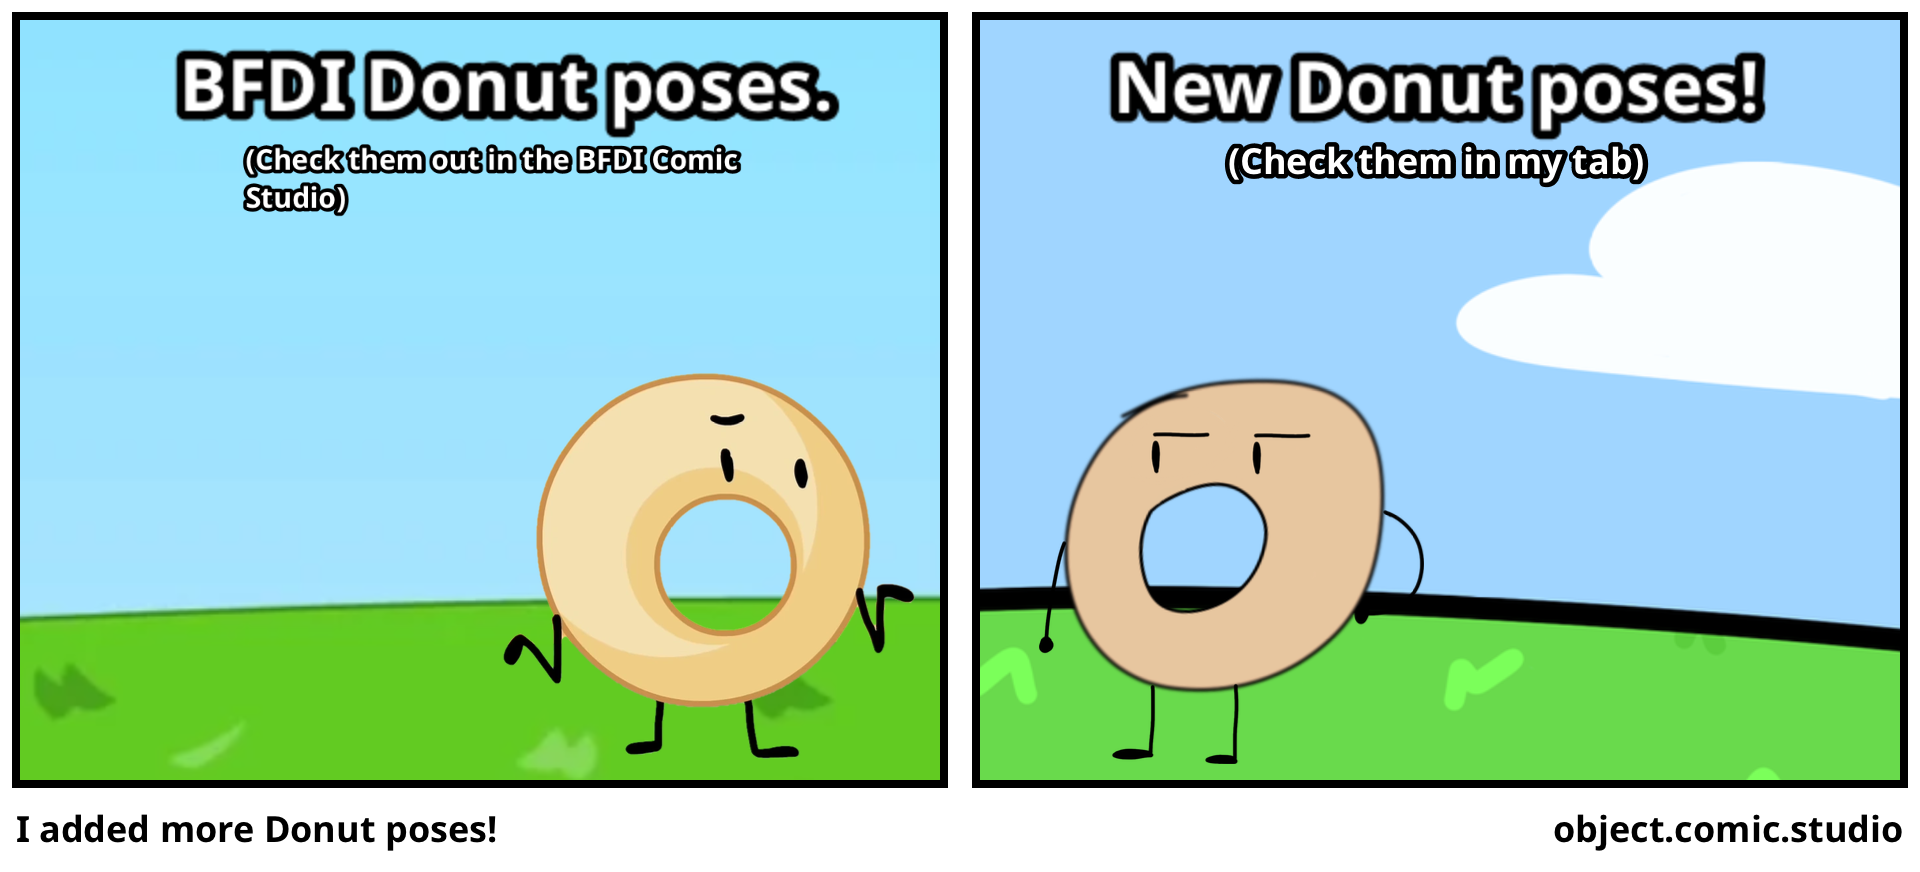 I added more Donut poses!